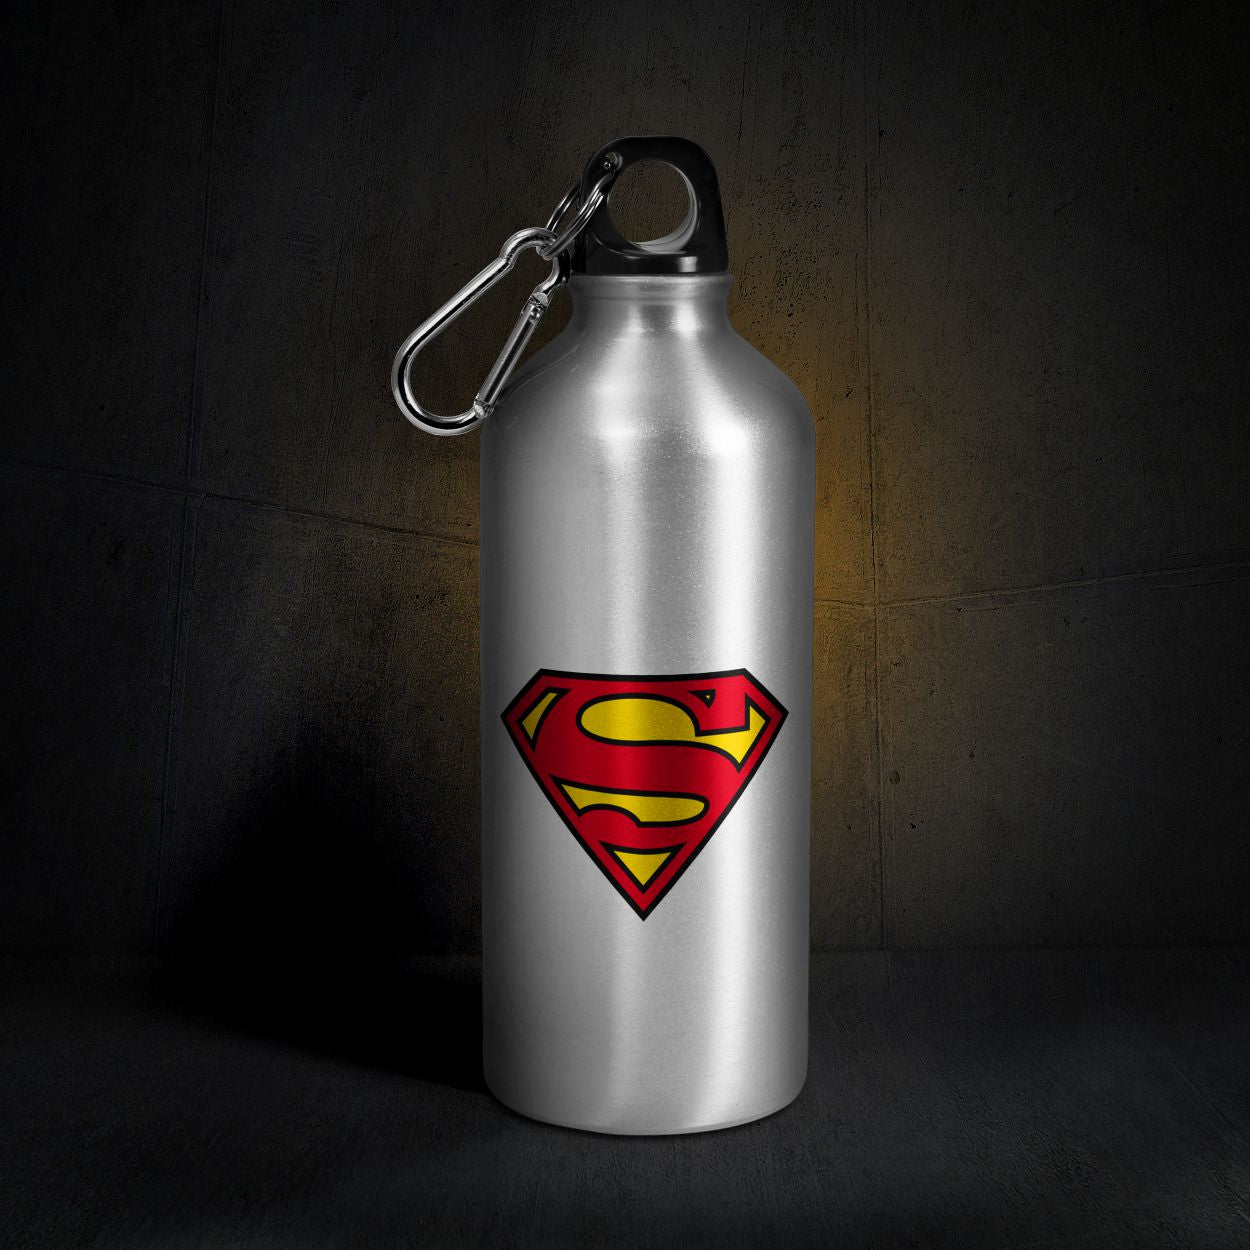 Superman themed Water Bottles (Aluminum)